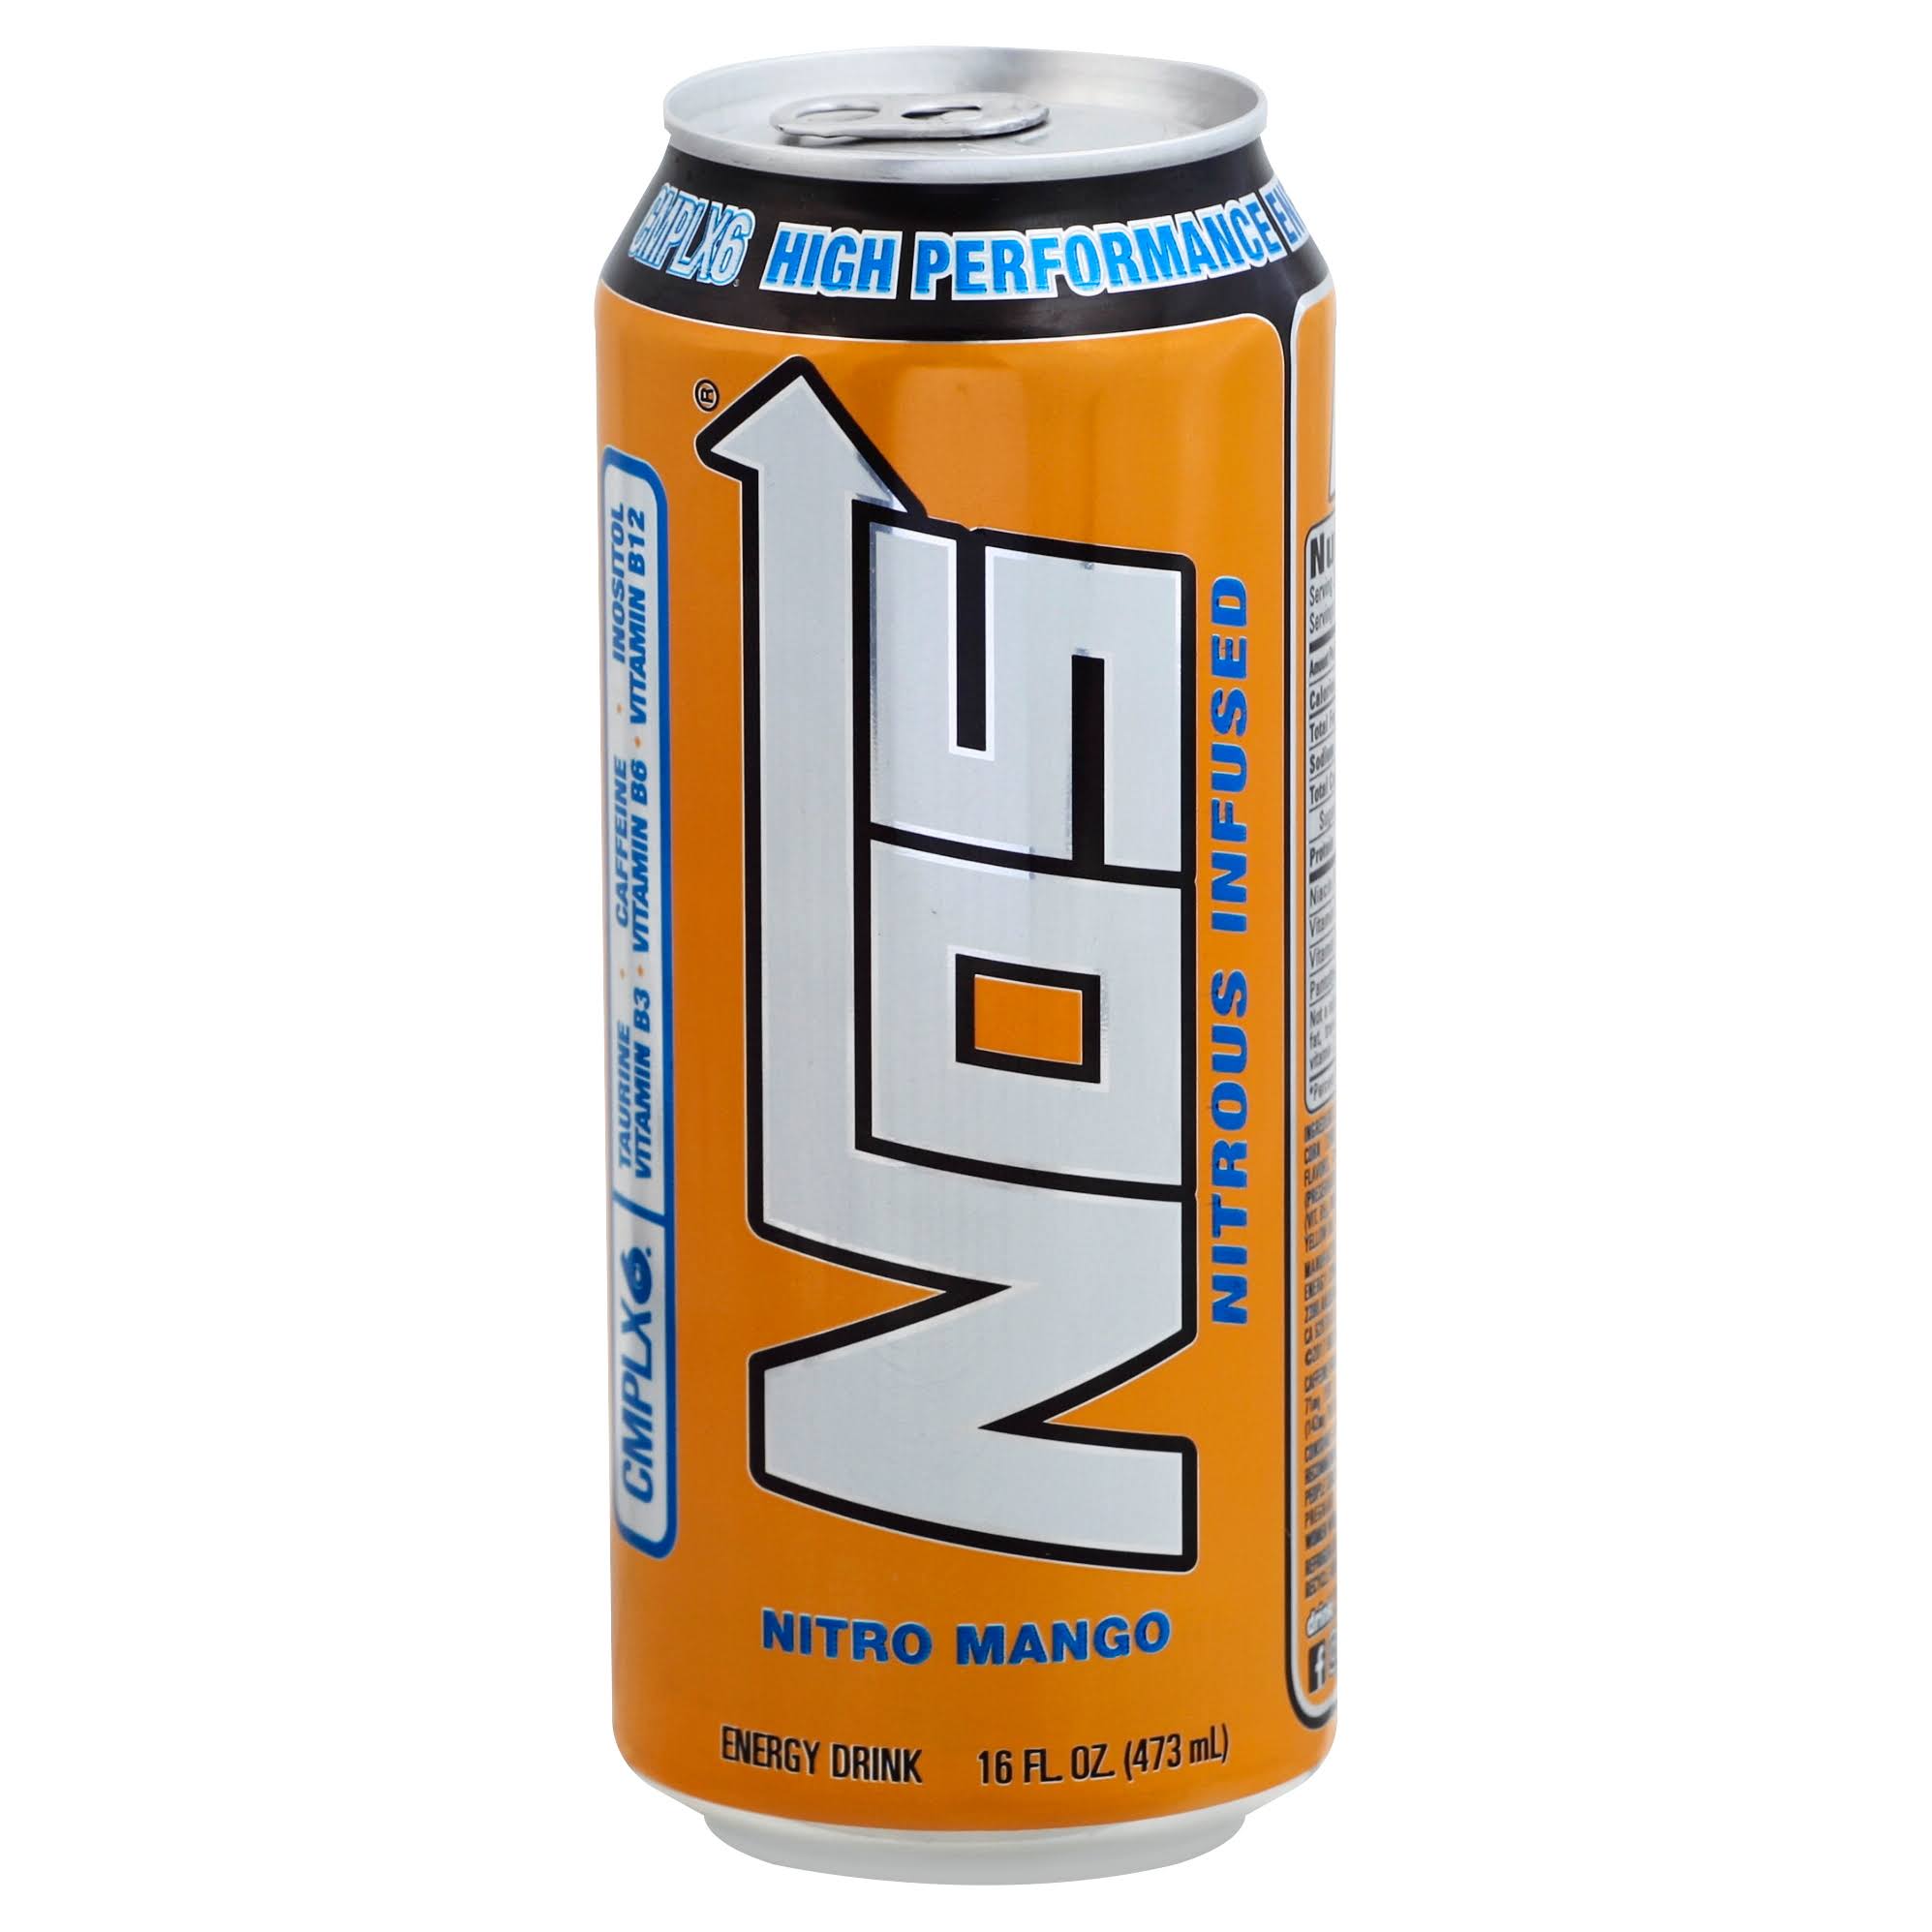 Nos Energy Drink, High Performance, Nitro Mango - 16 fl oz